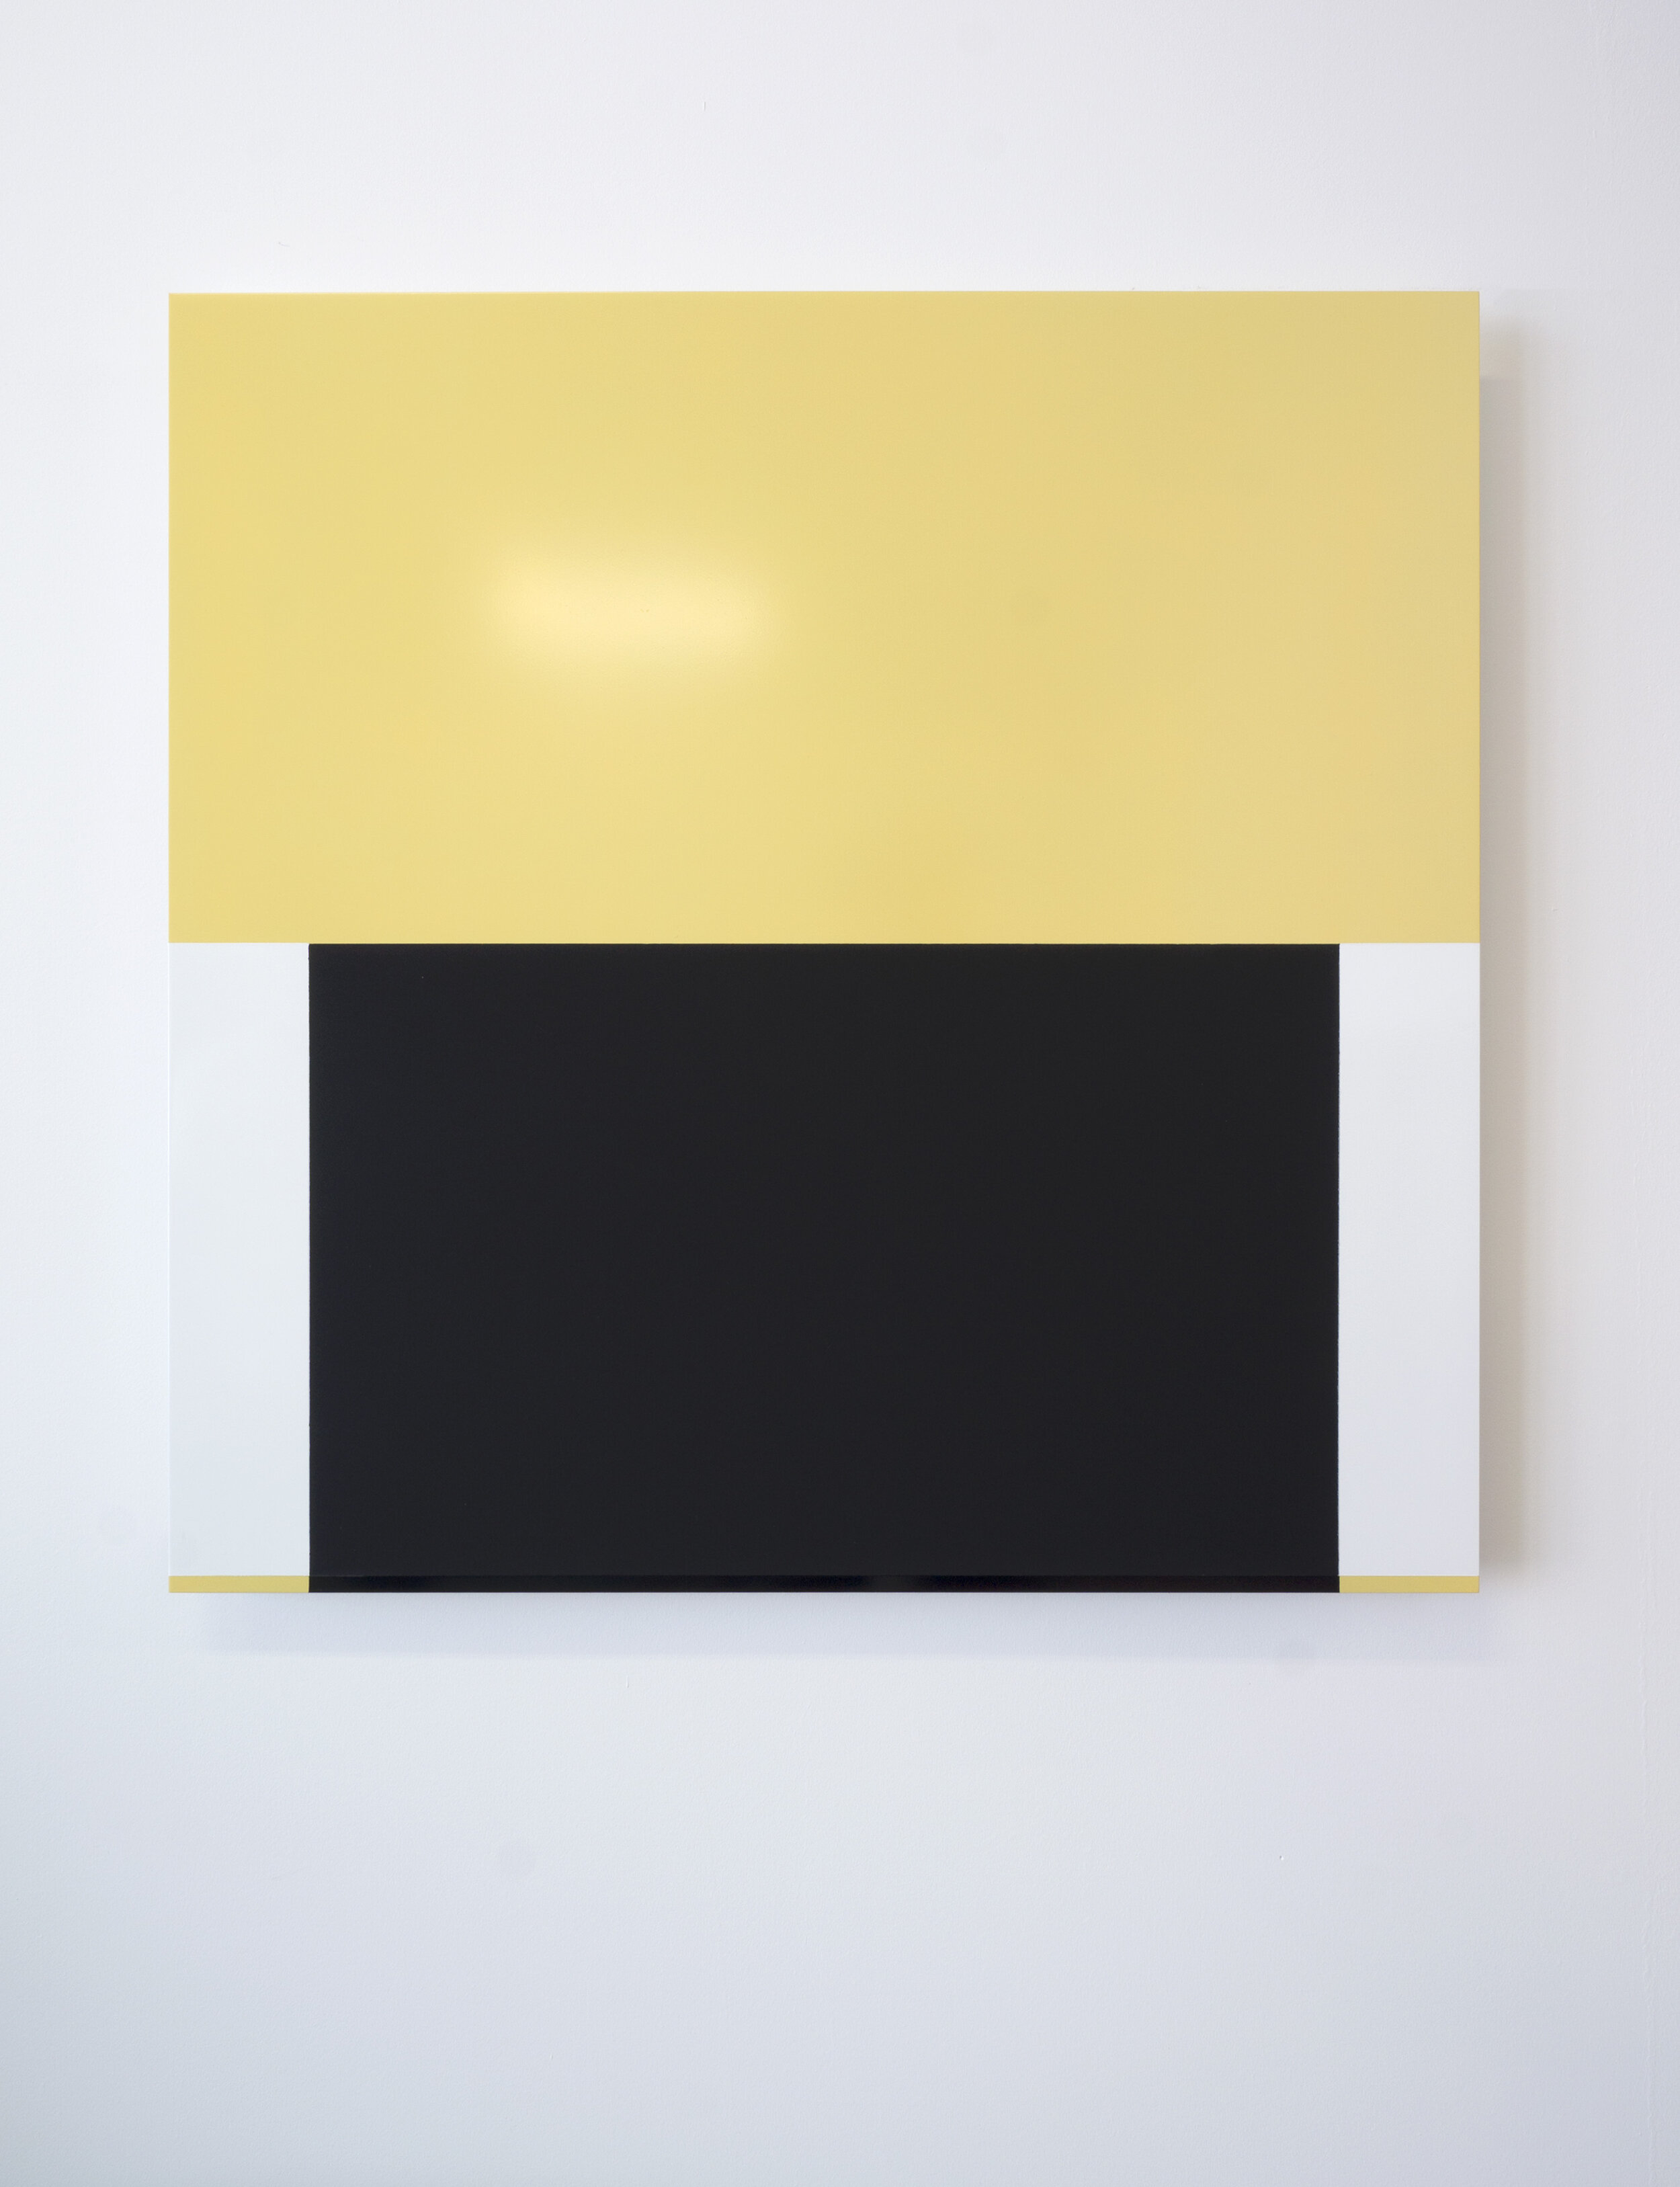  “Black Under Yellow:  2019  28” x 28”  spray paint on aluminum 